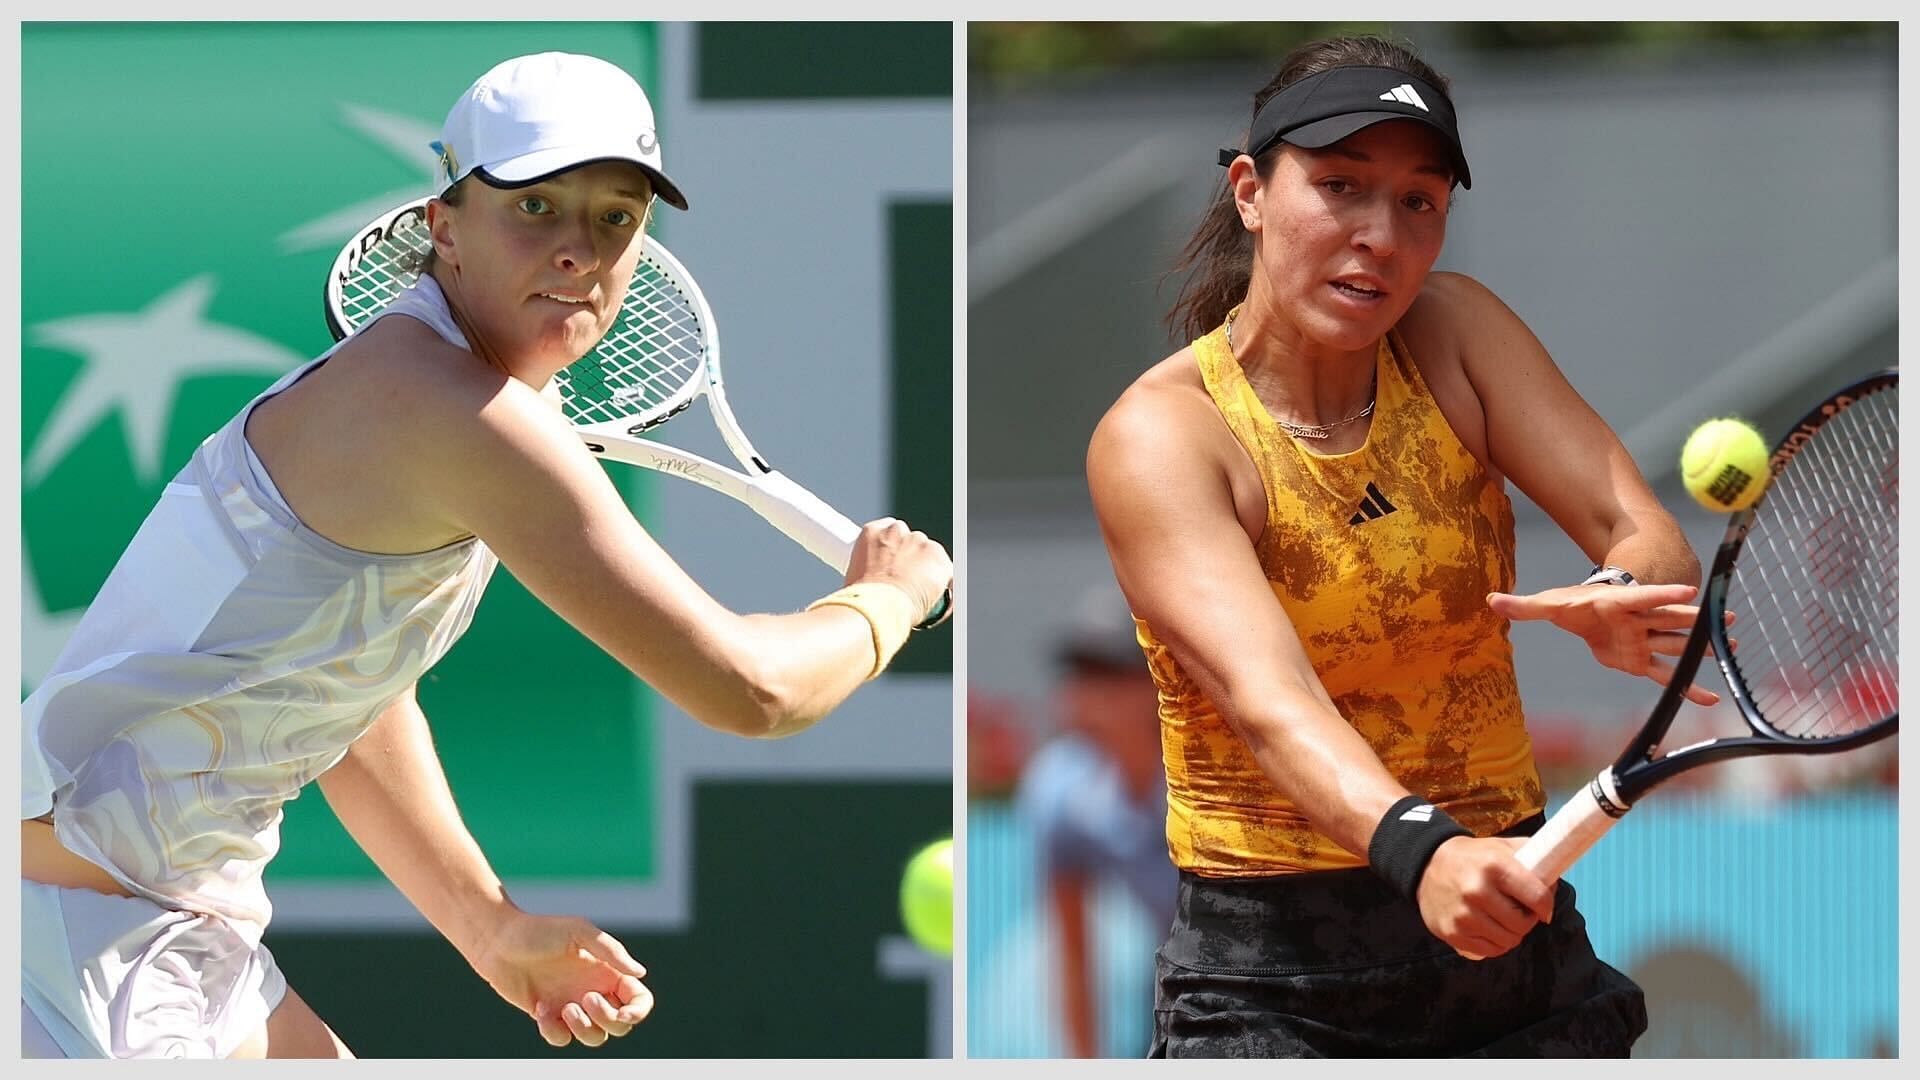 Iga Swiatek vs Jessica Pegula will be the final of the WTA Finals